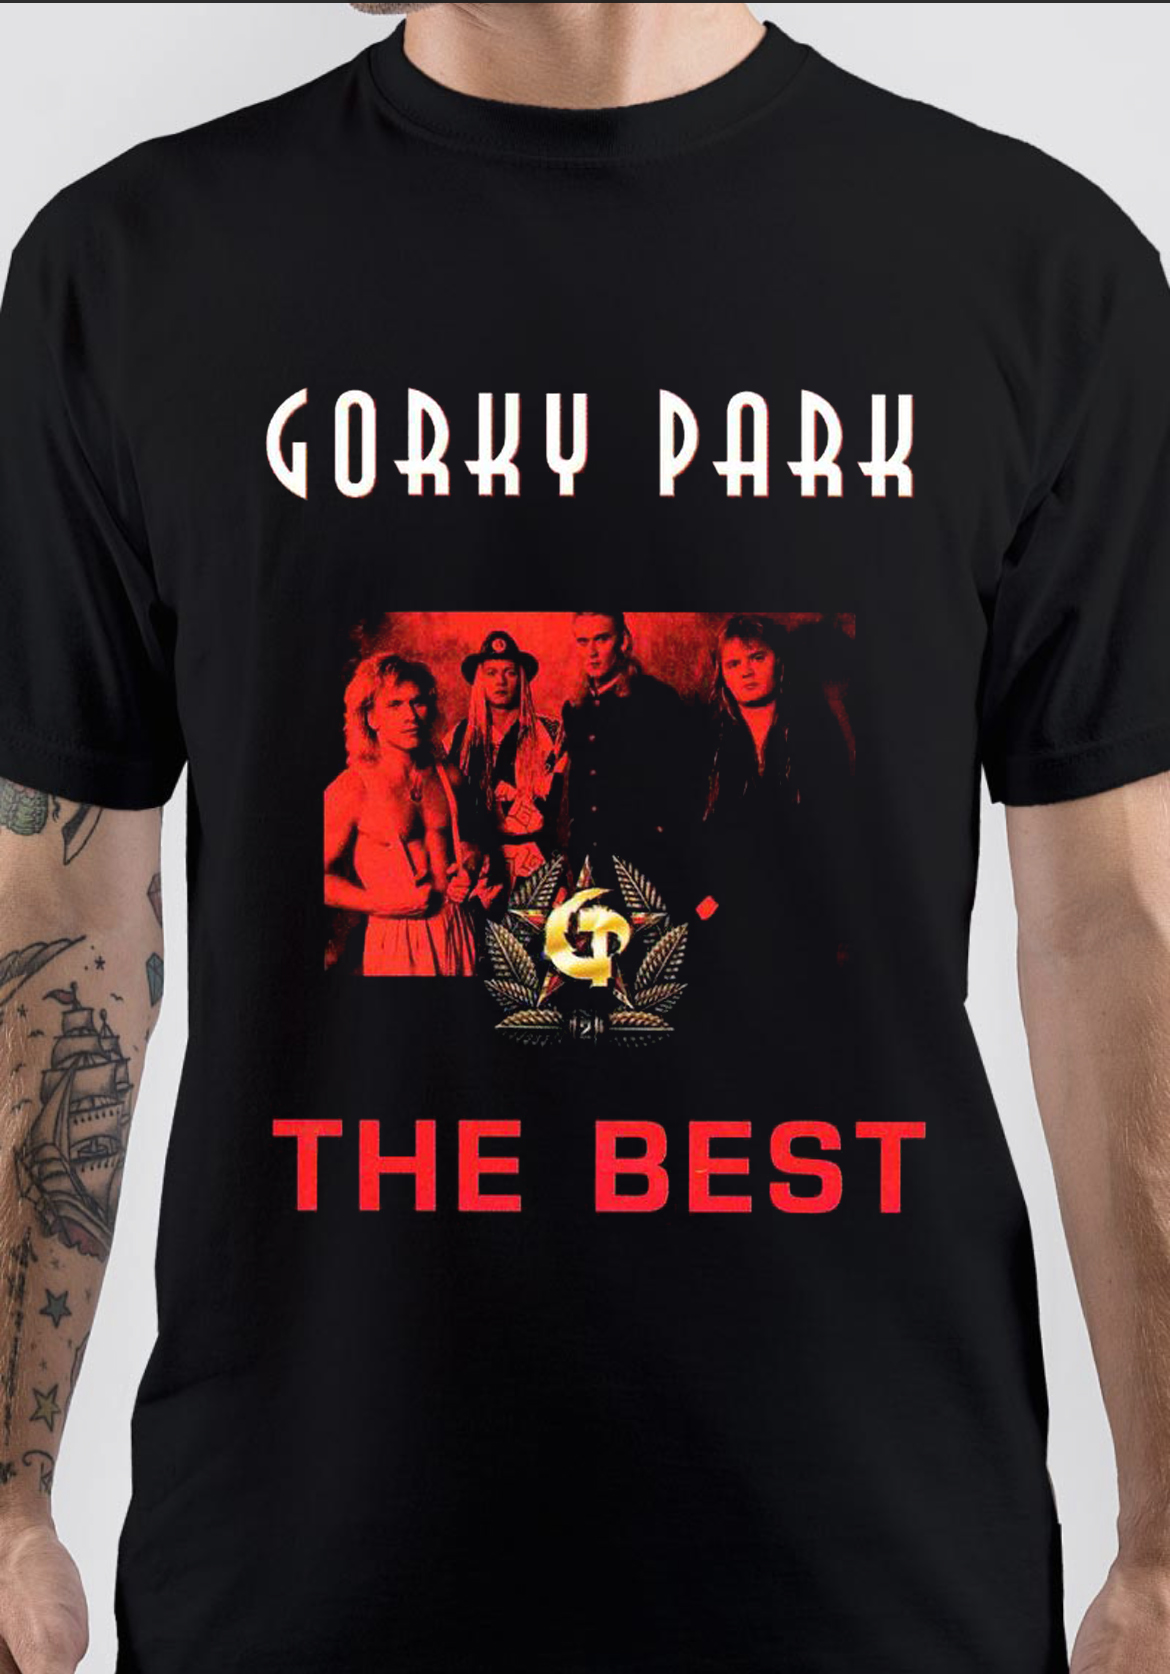 Gorky Park T-Shirt And Merchandise